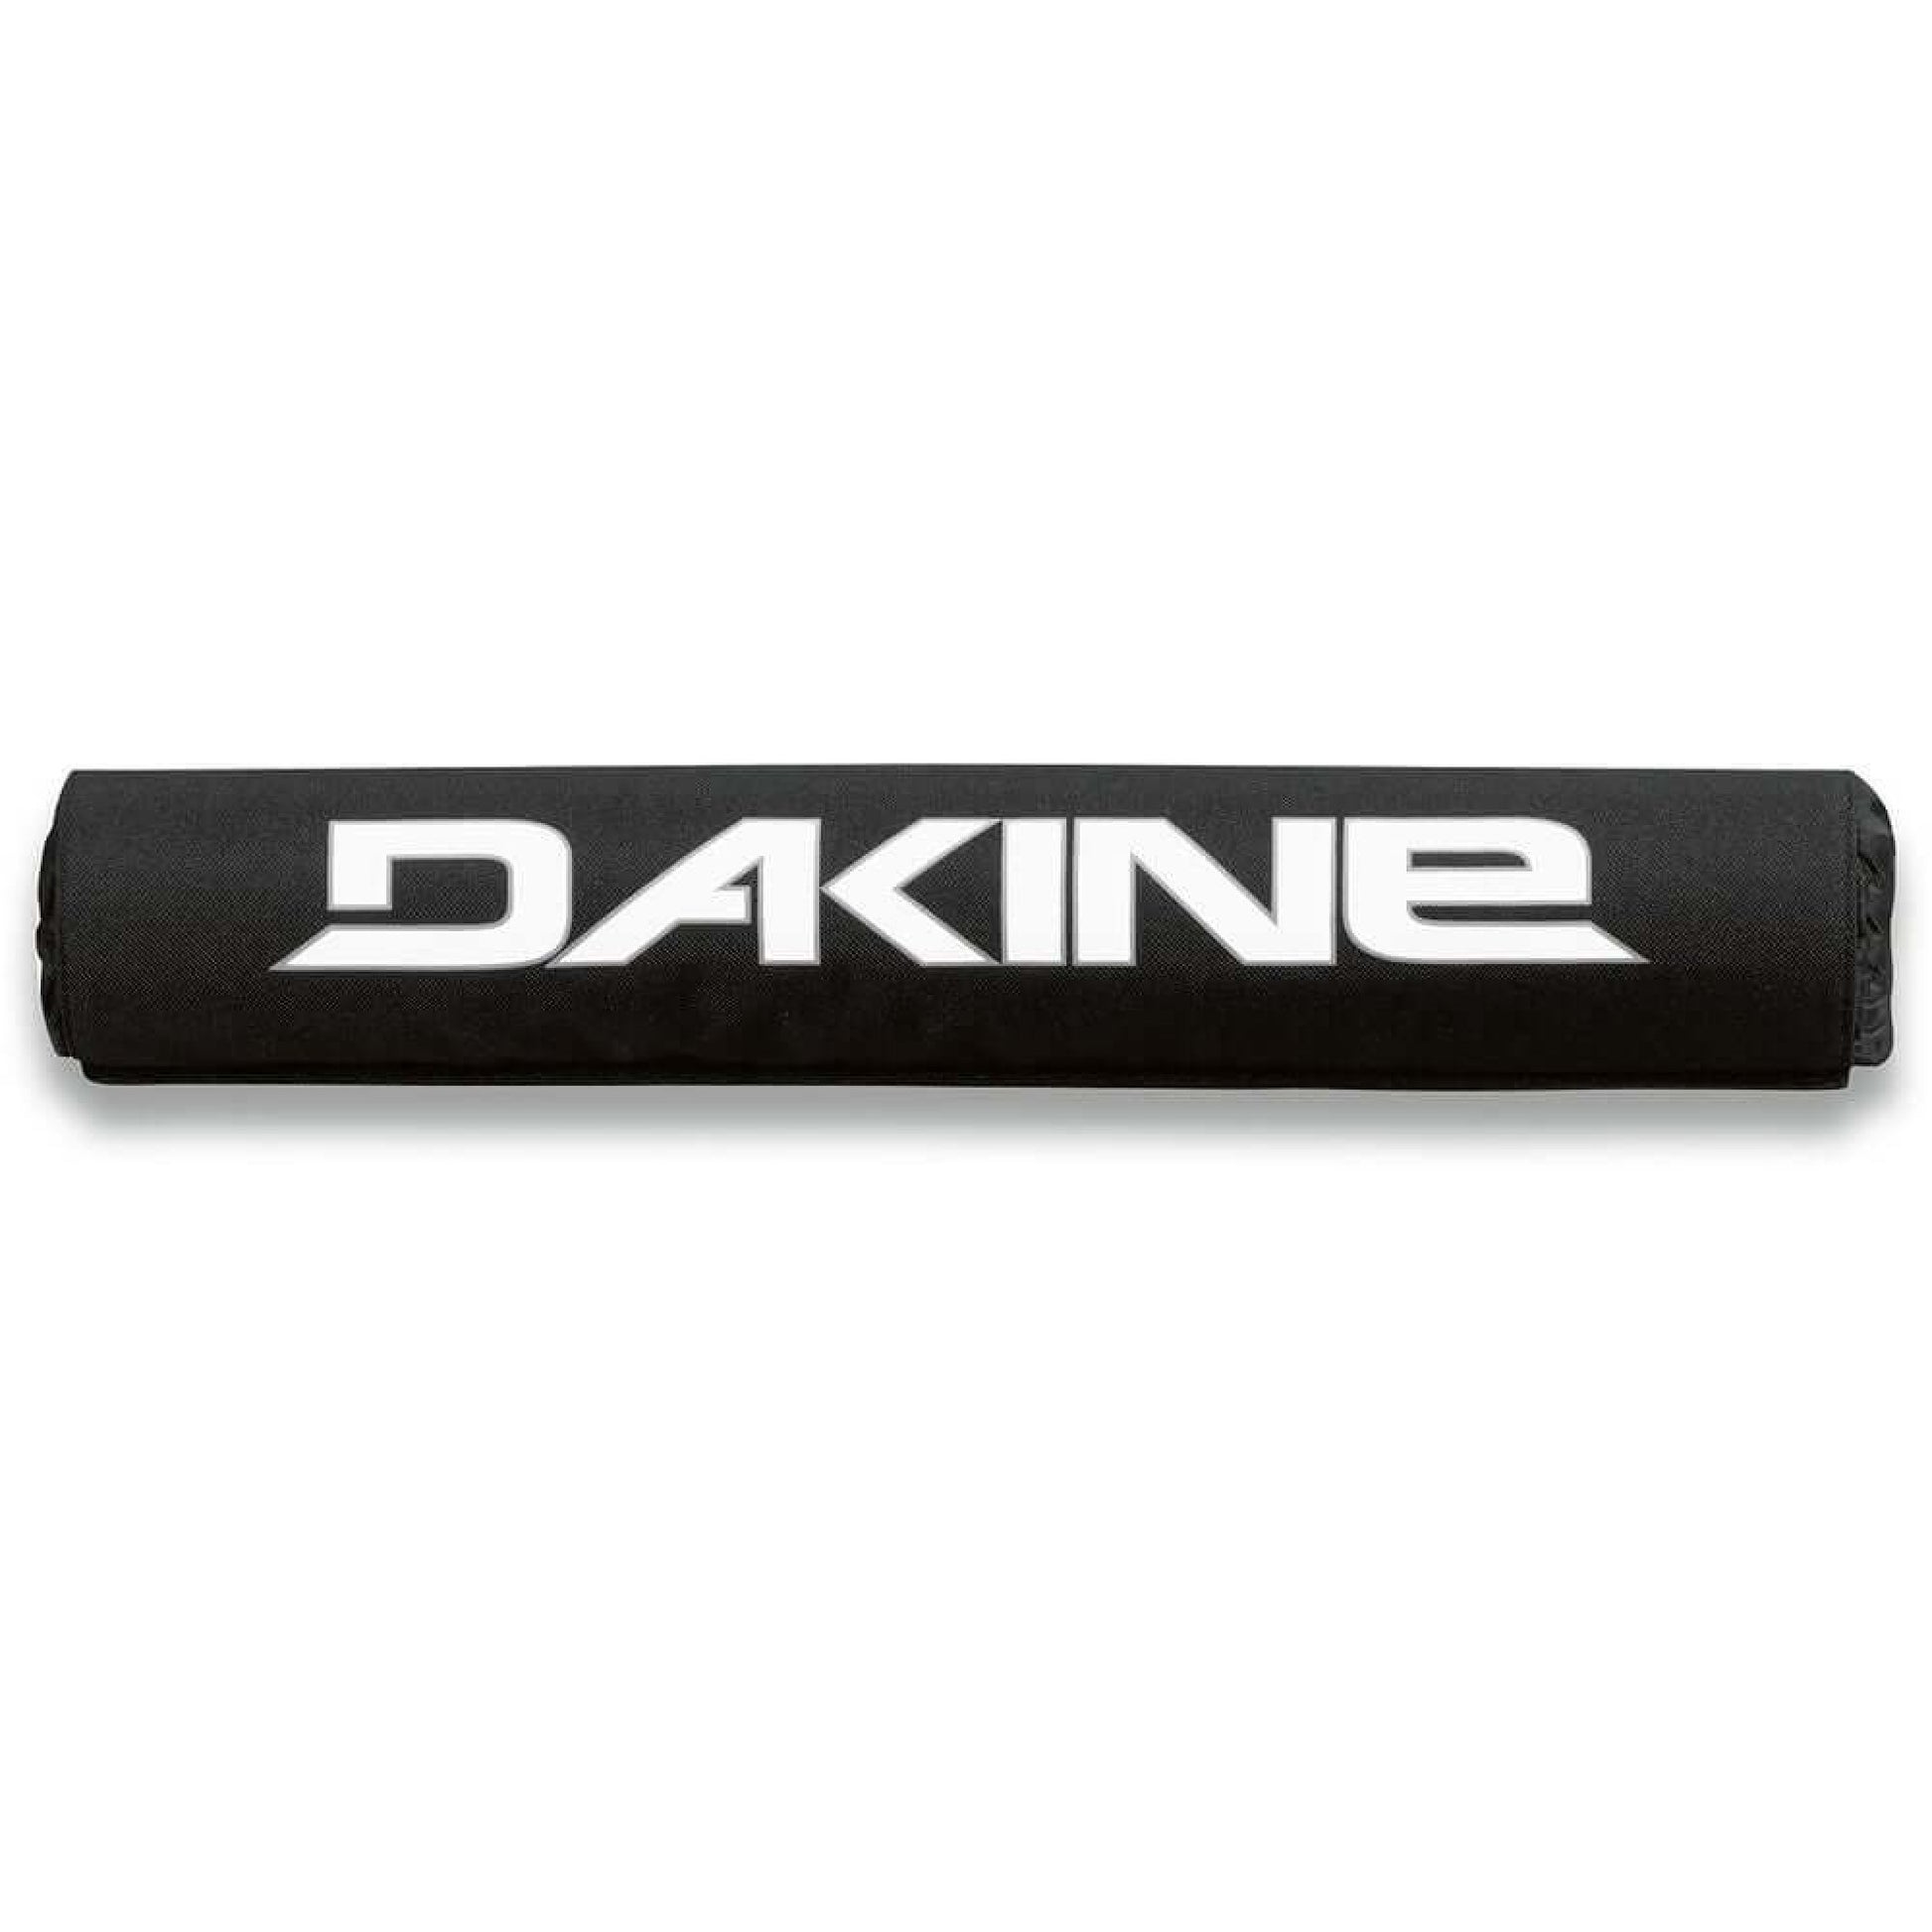 Dakine Rack Pads 18" Black OS Surf Accessories